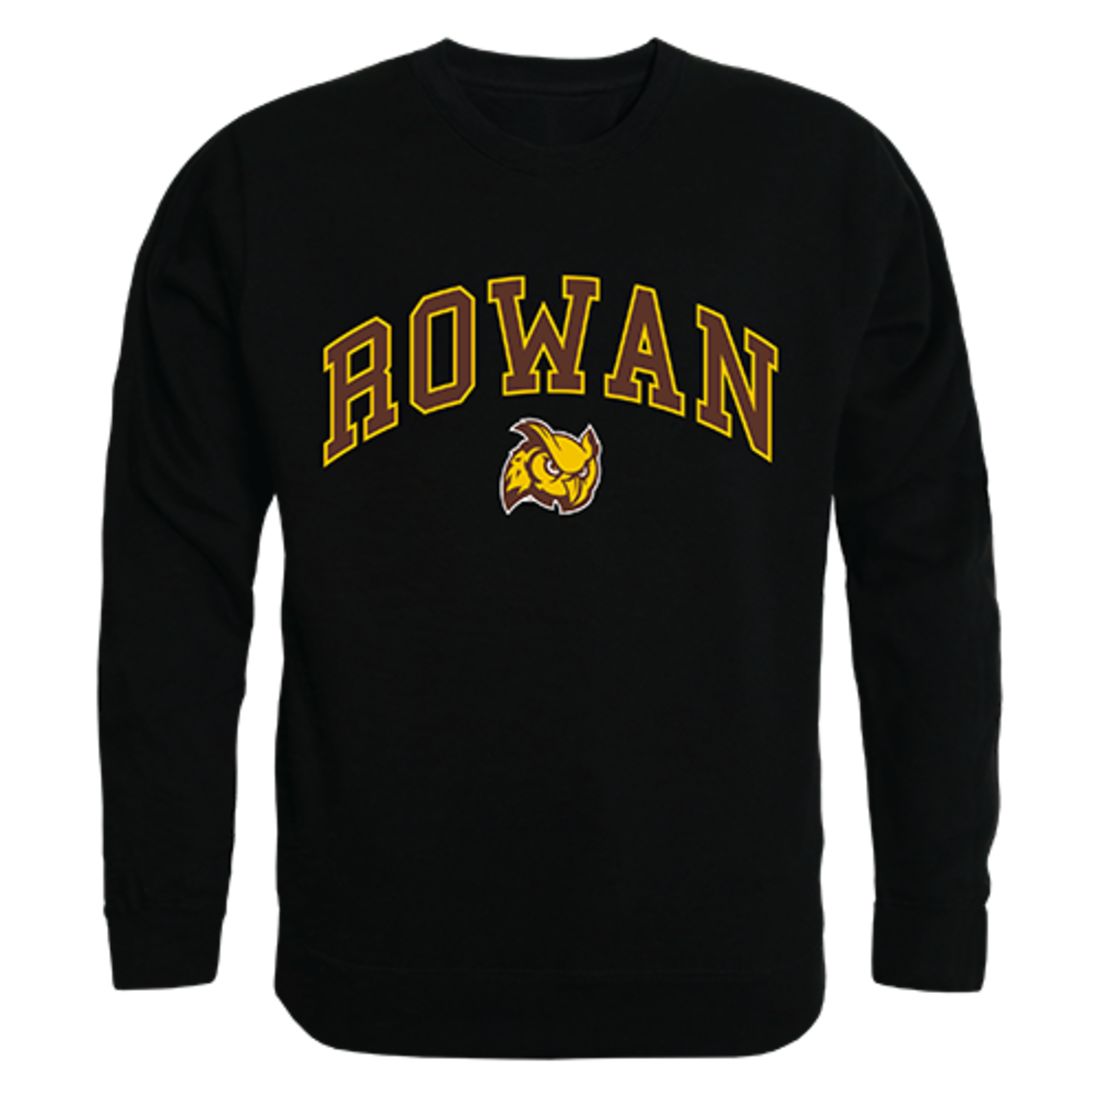 Rowan University Campus Crewneck Pullover Sweatshirt Sweater Black-Campus-Wardrobe